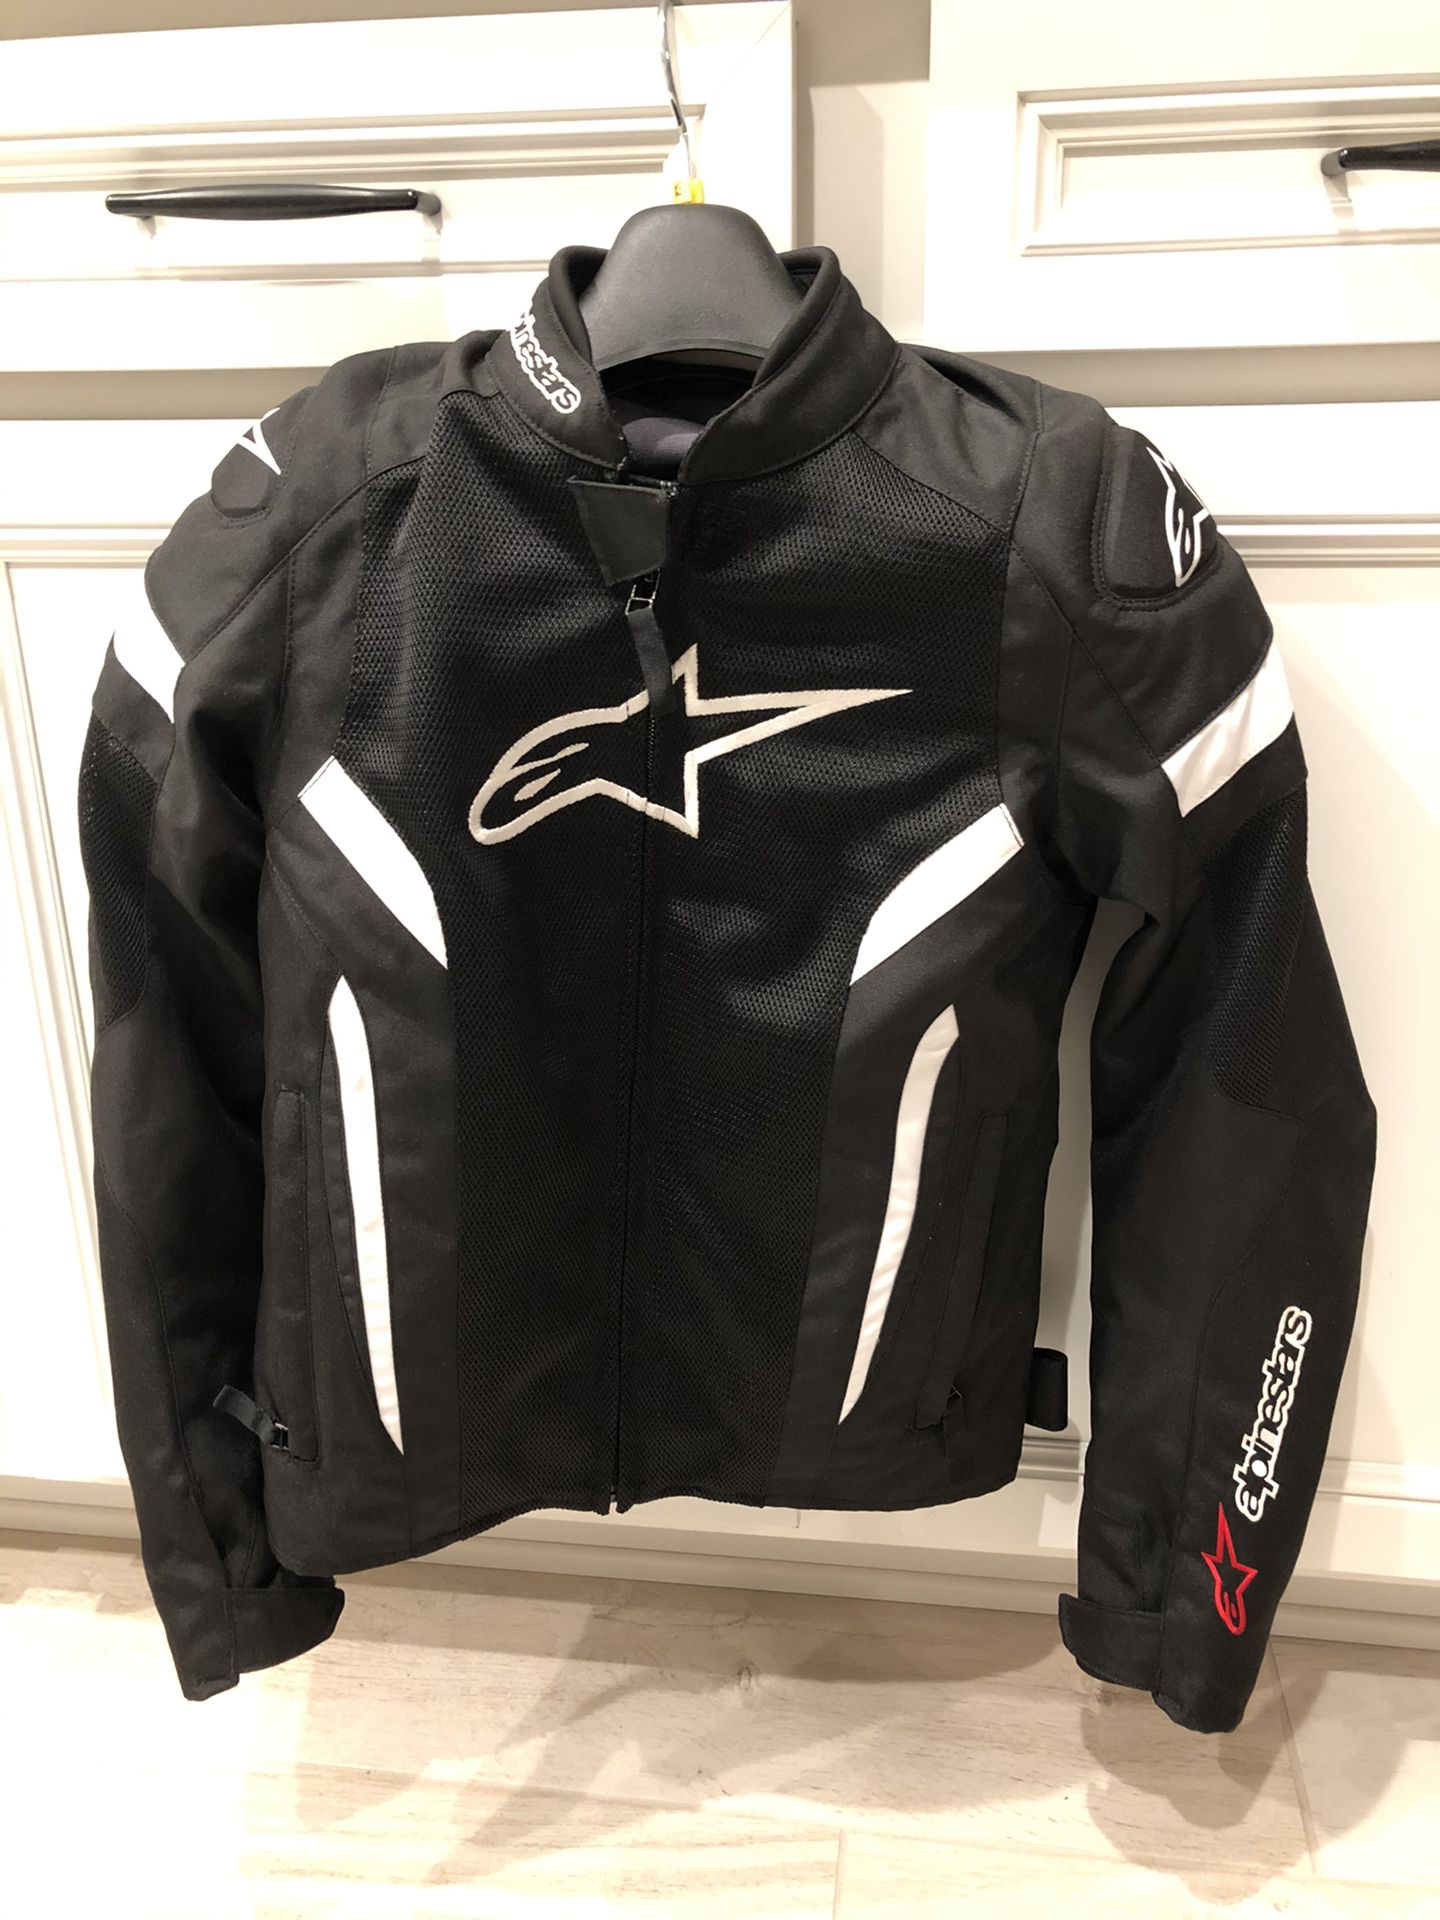 XS women’s Alpinestar Motorcycle Jacket